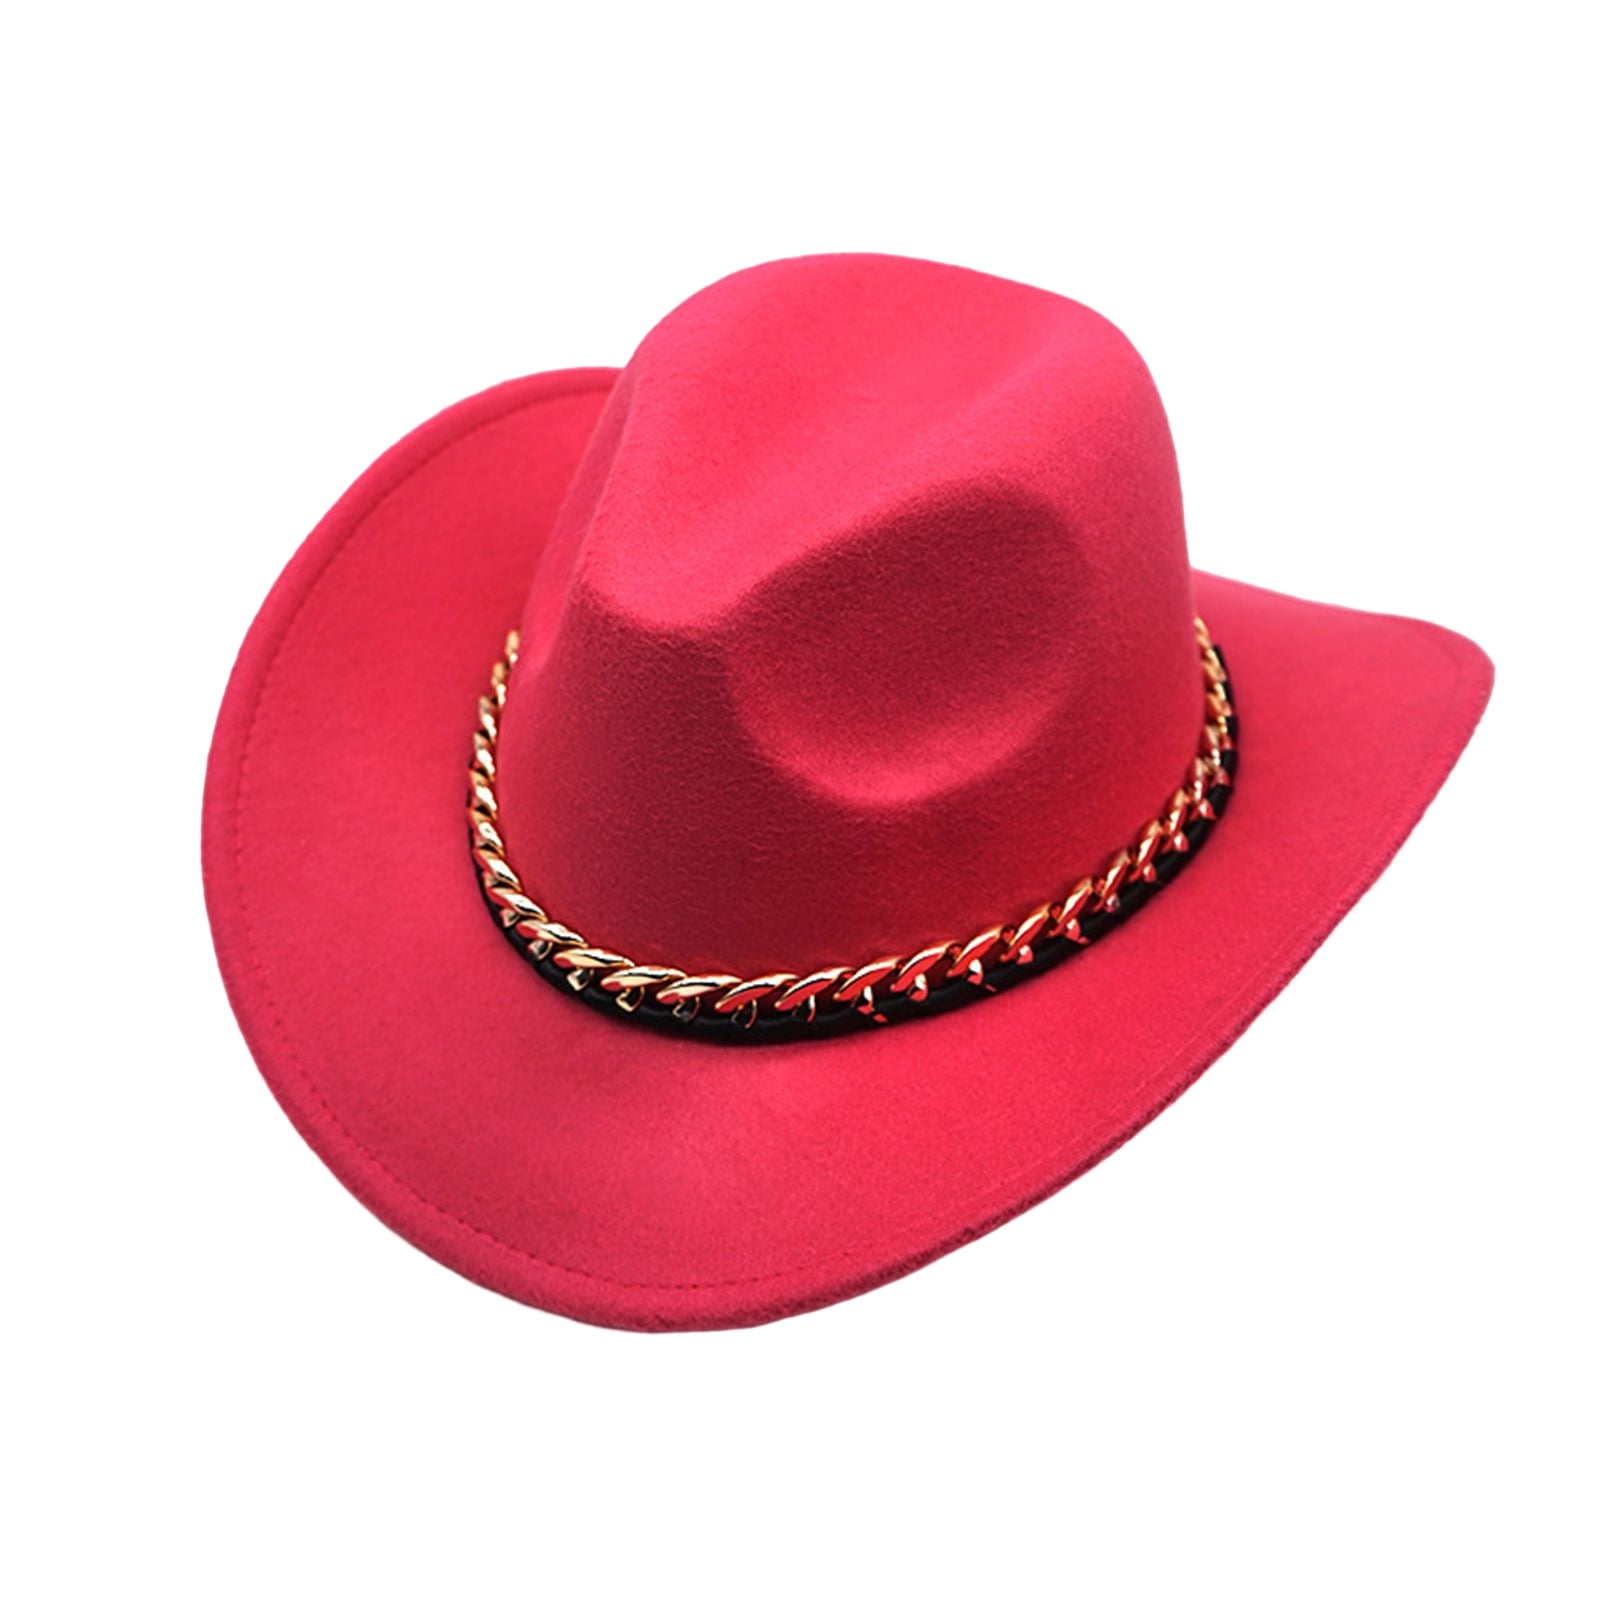 The 10 Best Cowboy Western Wide Brim Hats at Historical Emporium